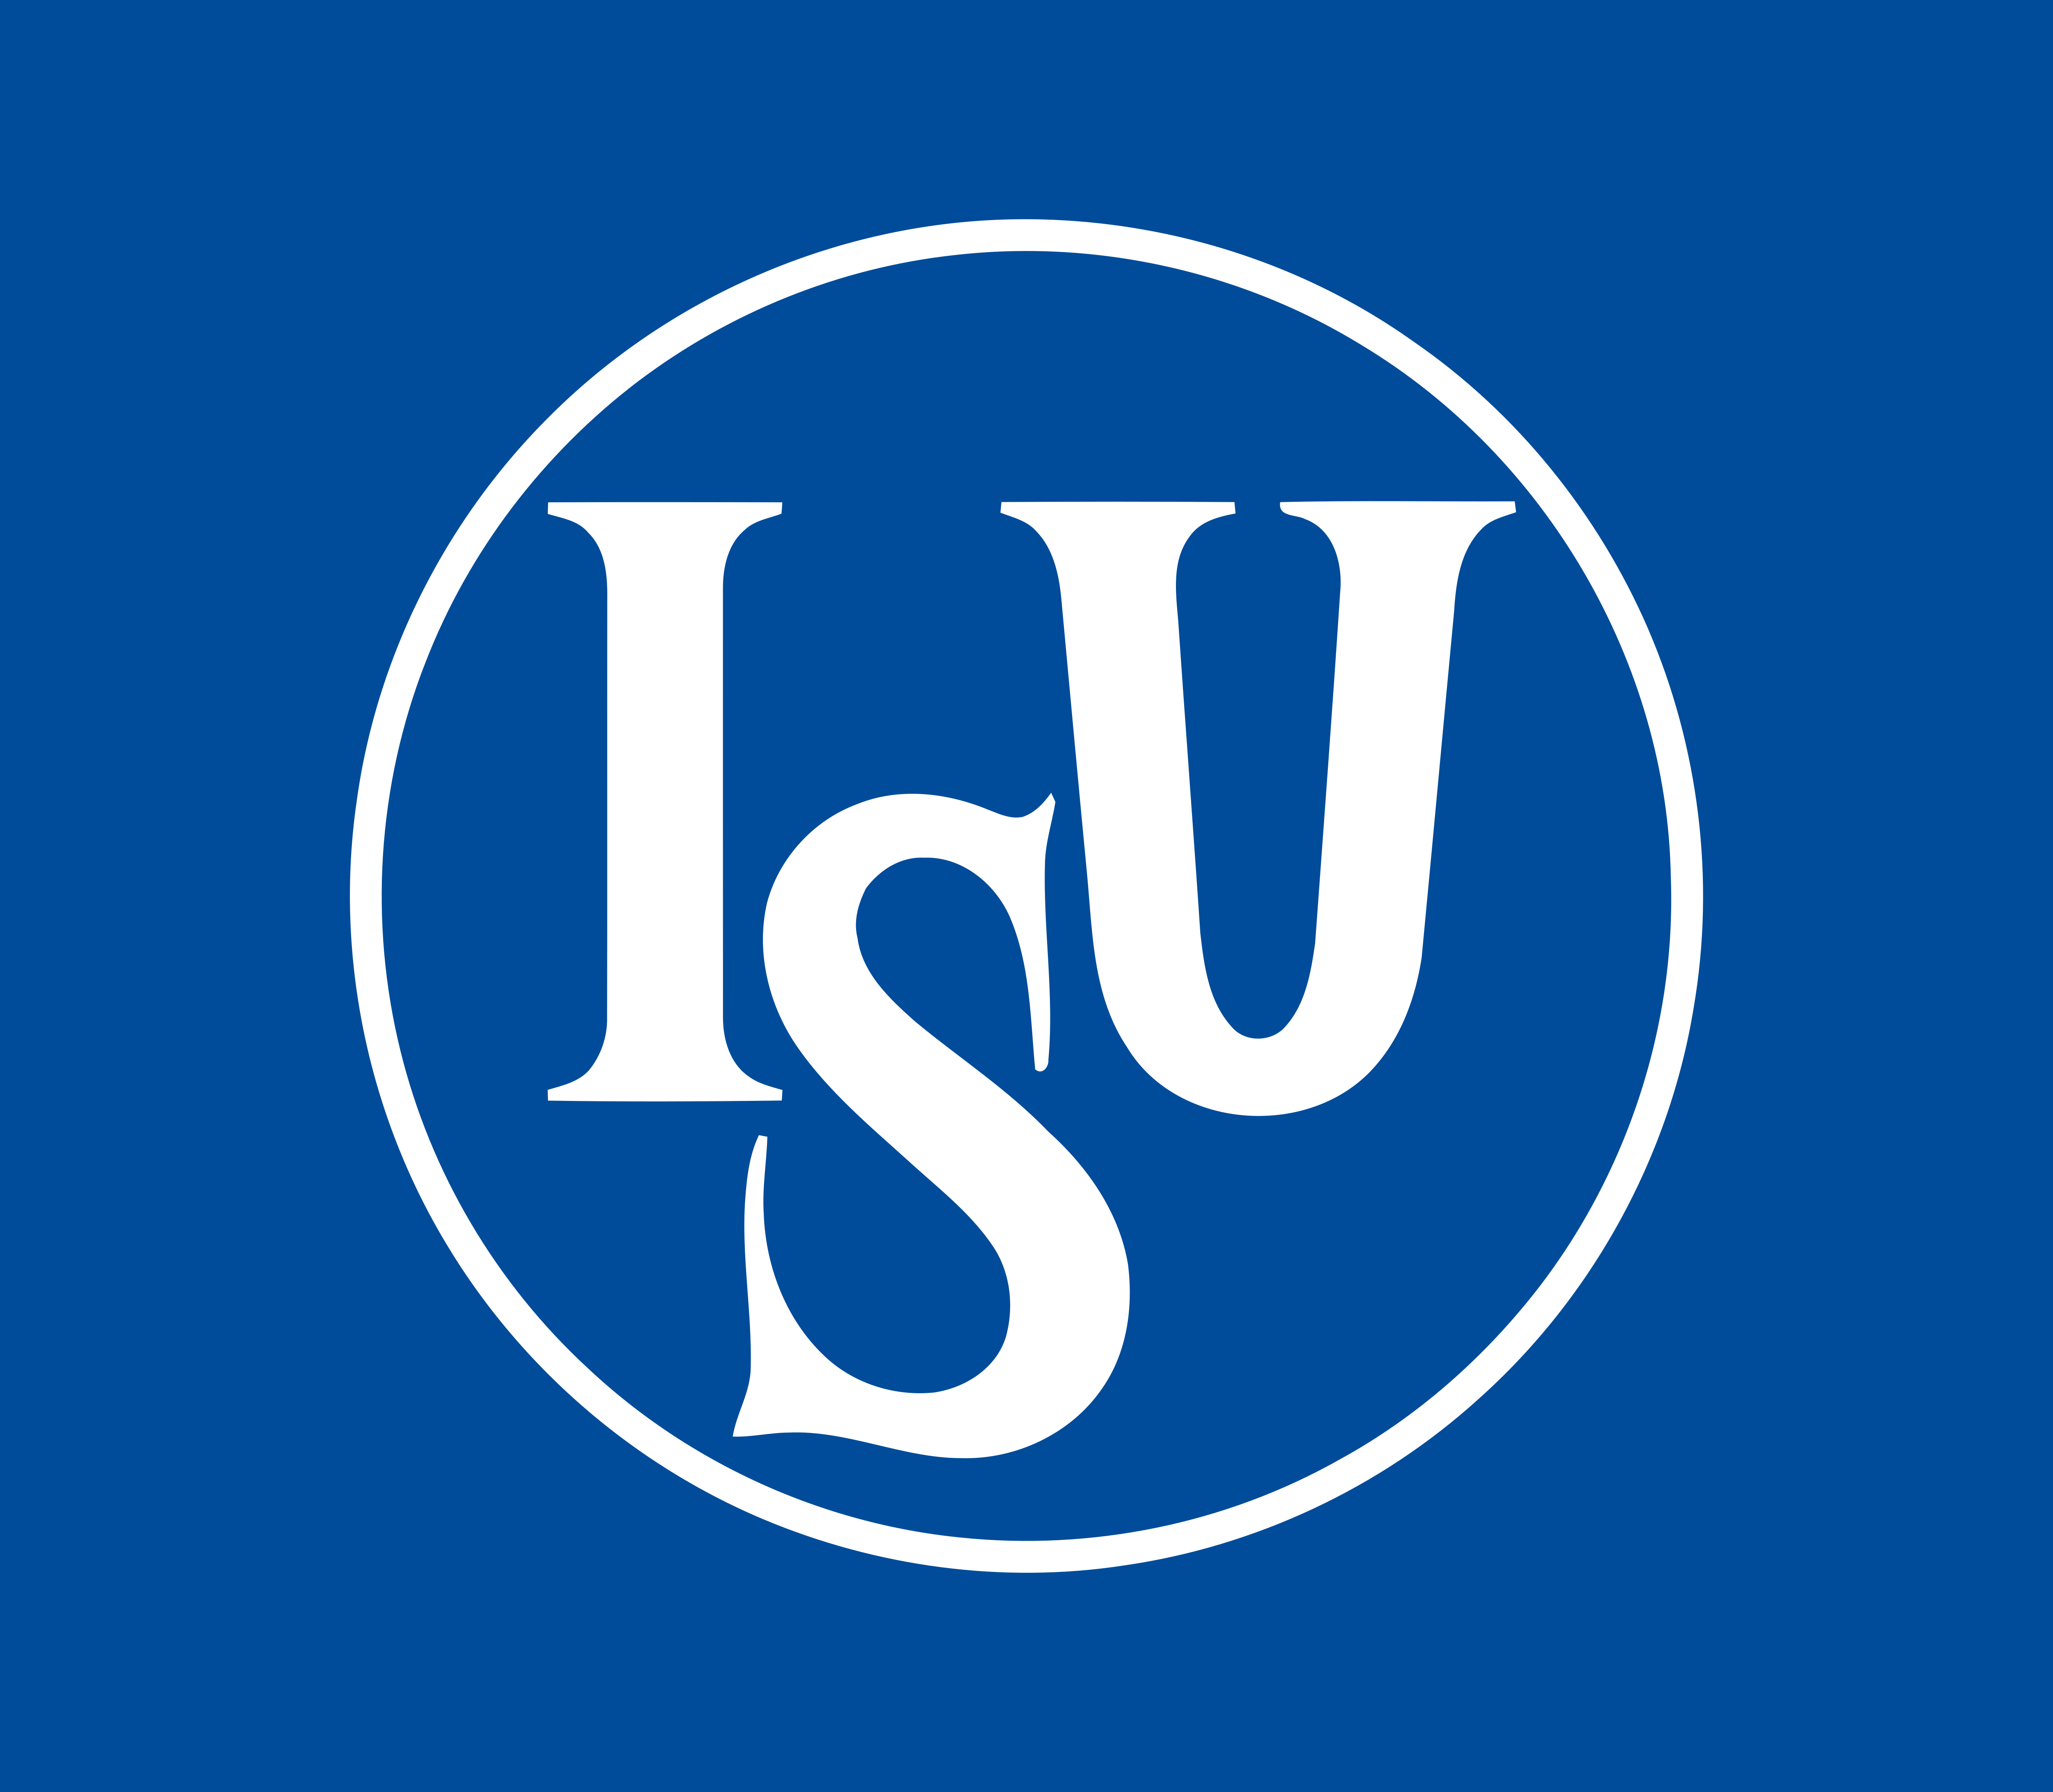 ISU News